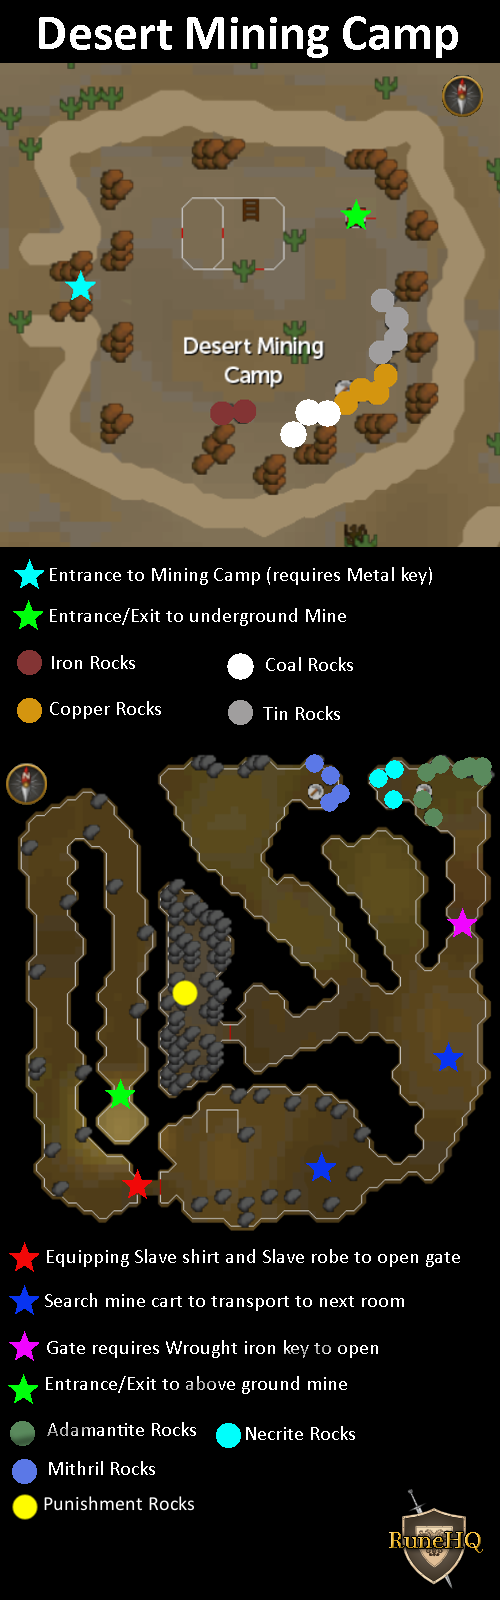 Desert Mining Camp Map